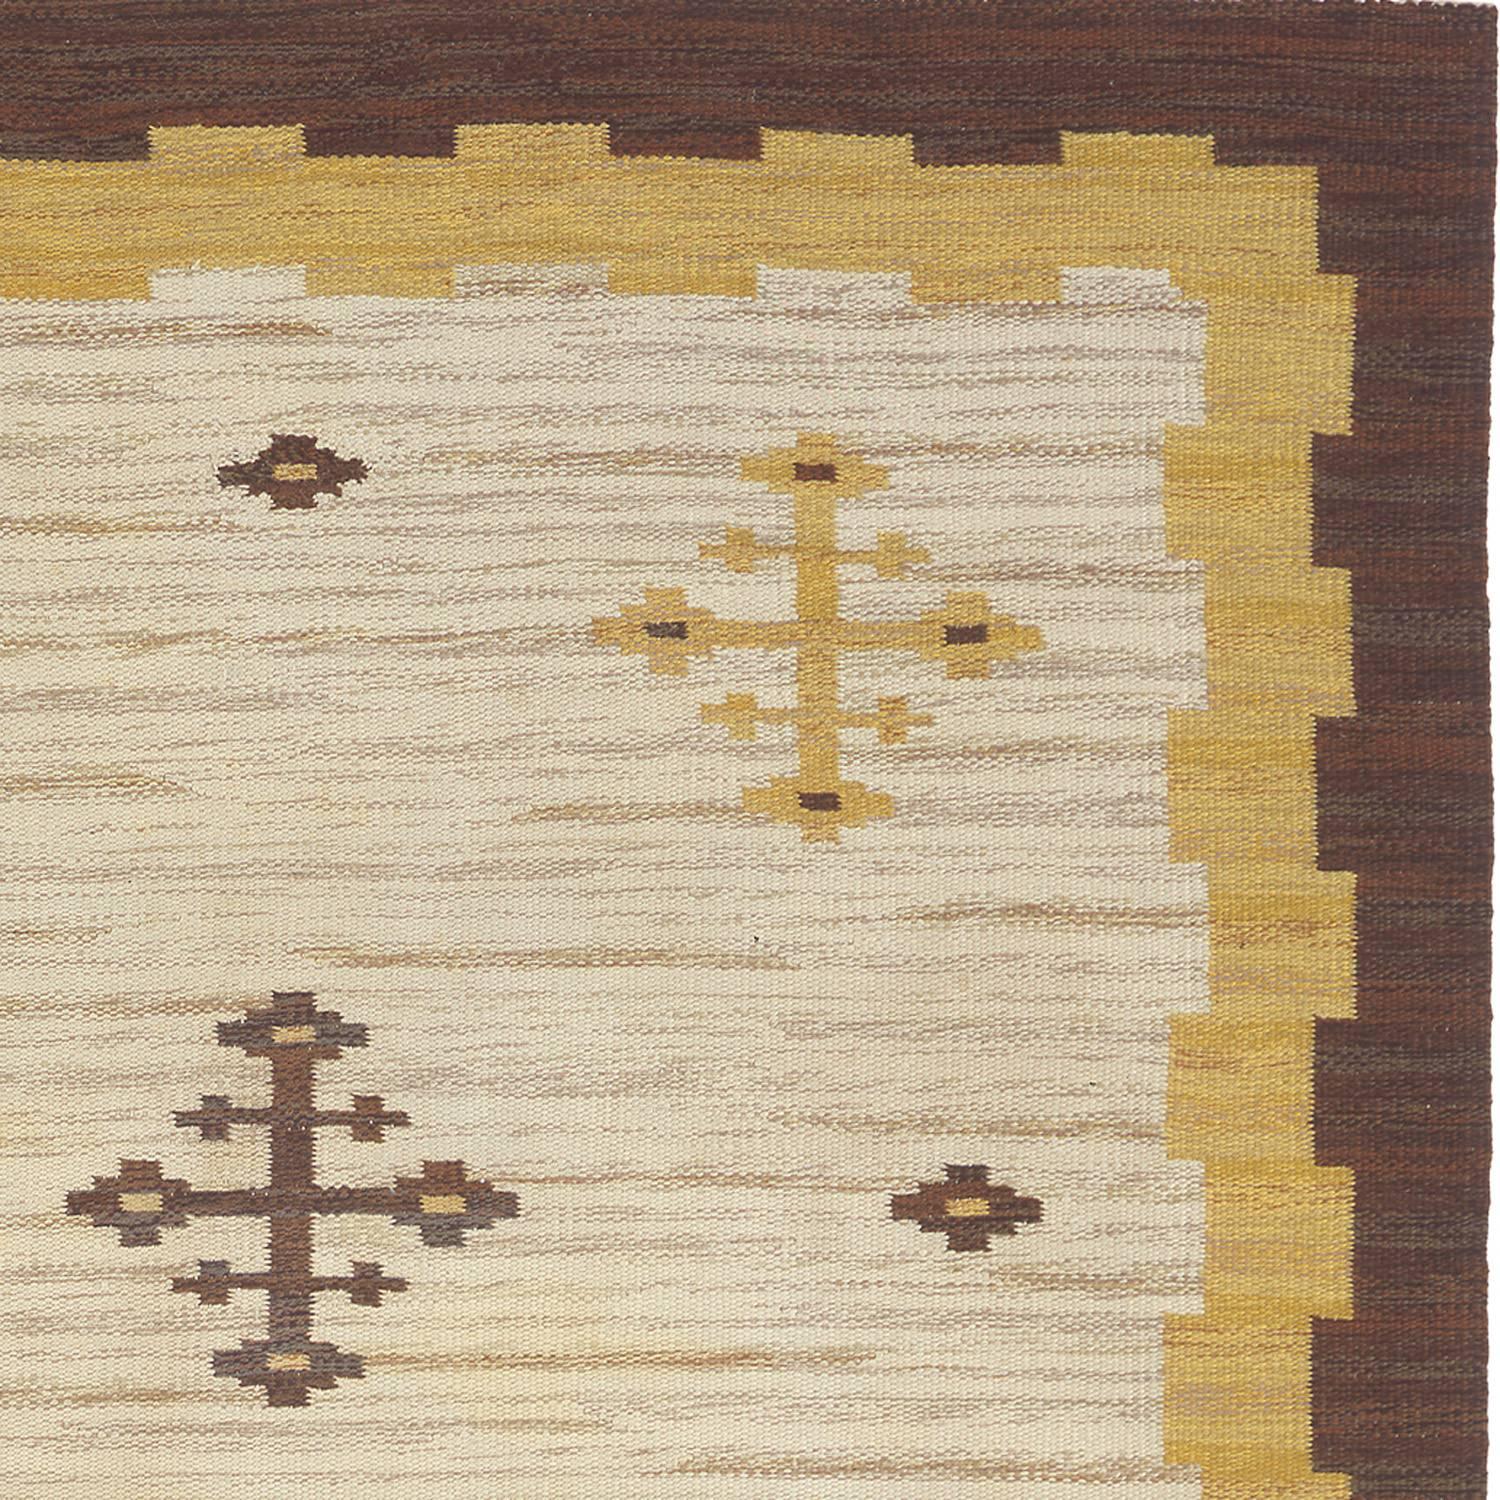 Early-20th century Swedish flat-weave carpet, initialed 